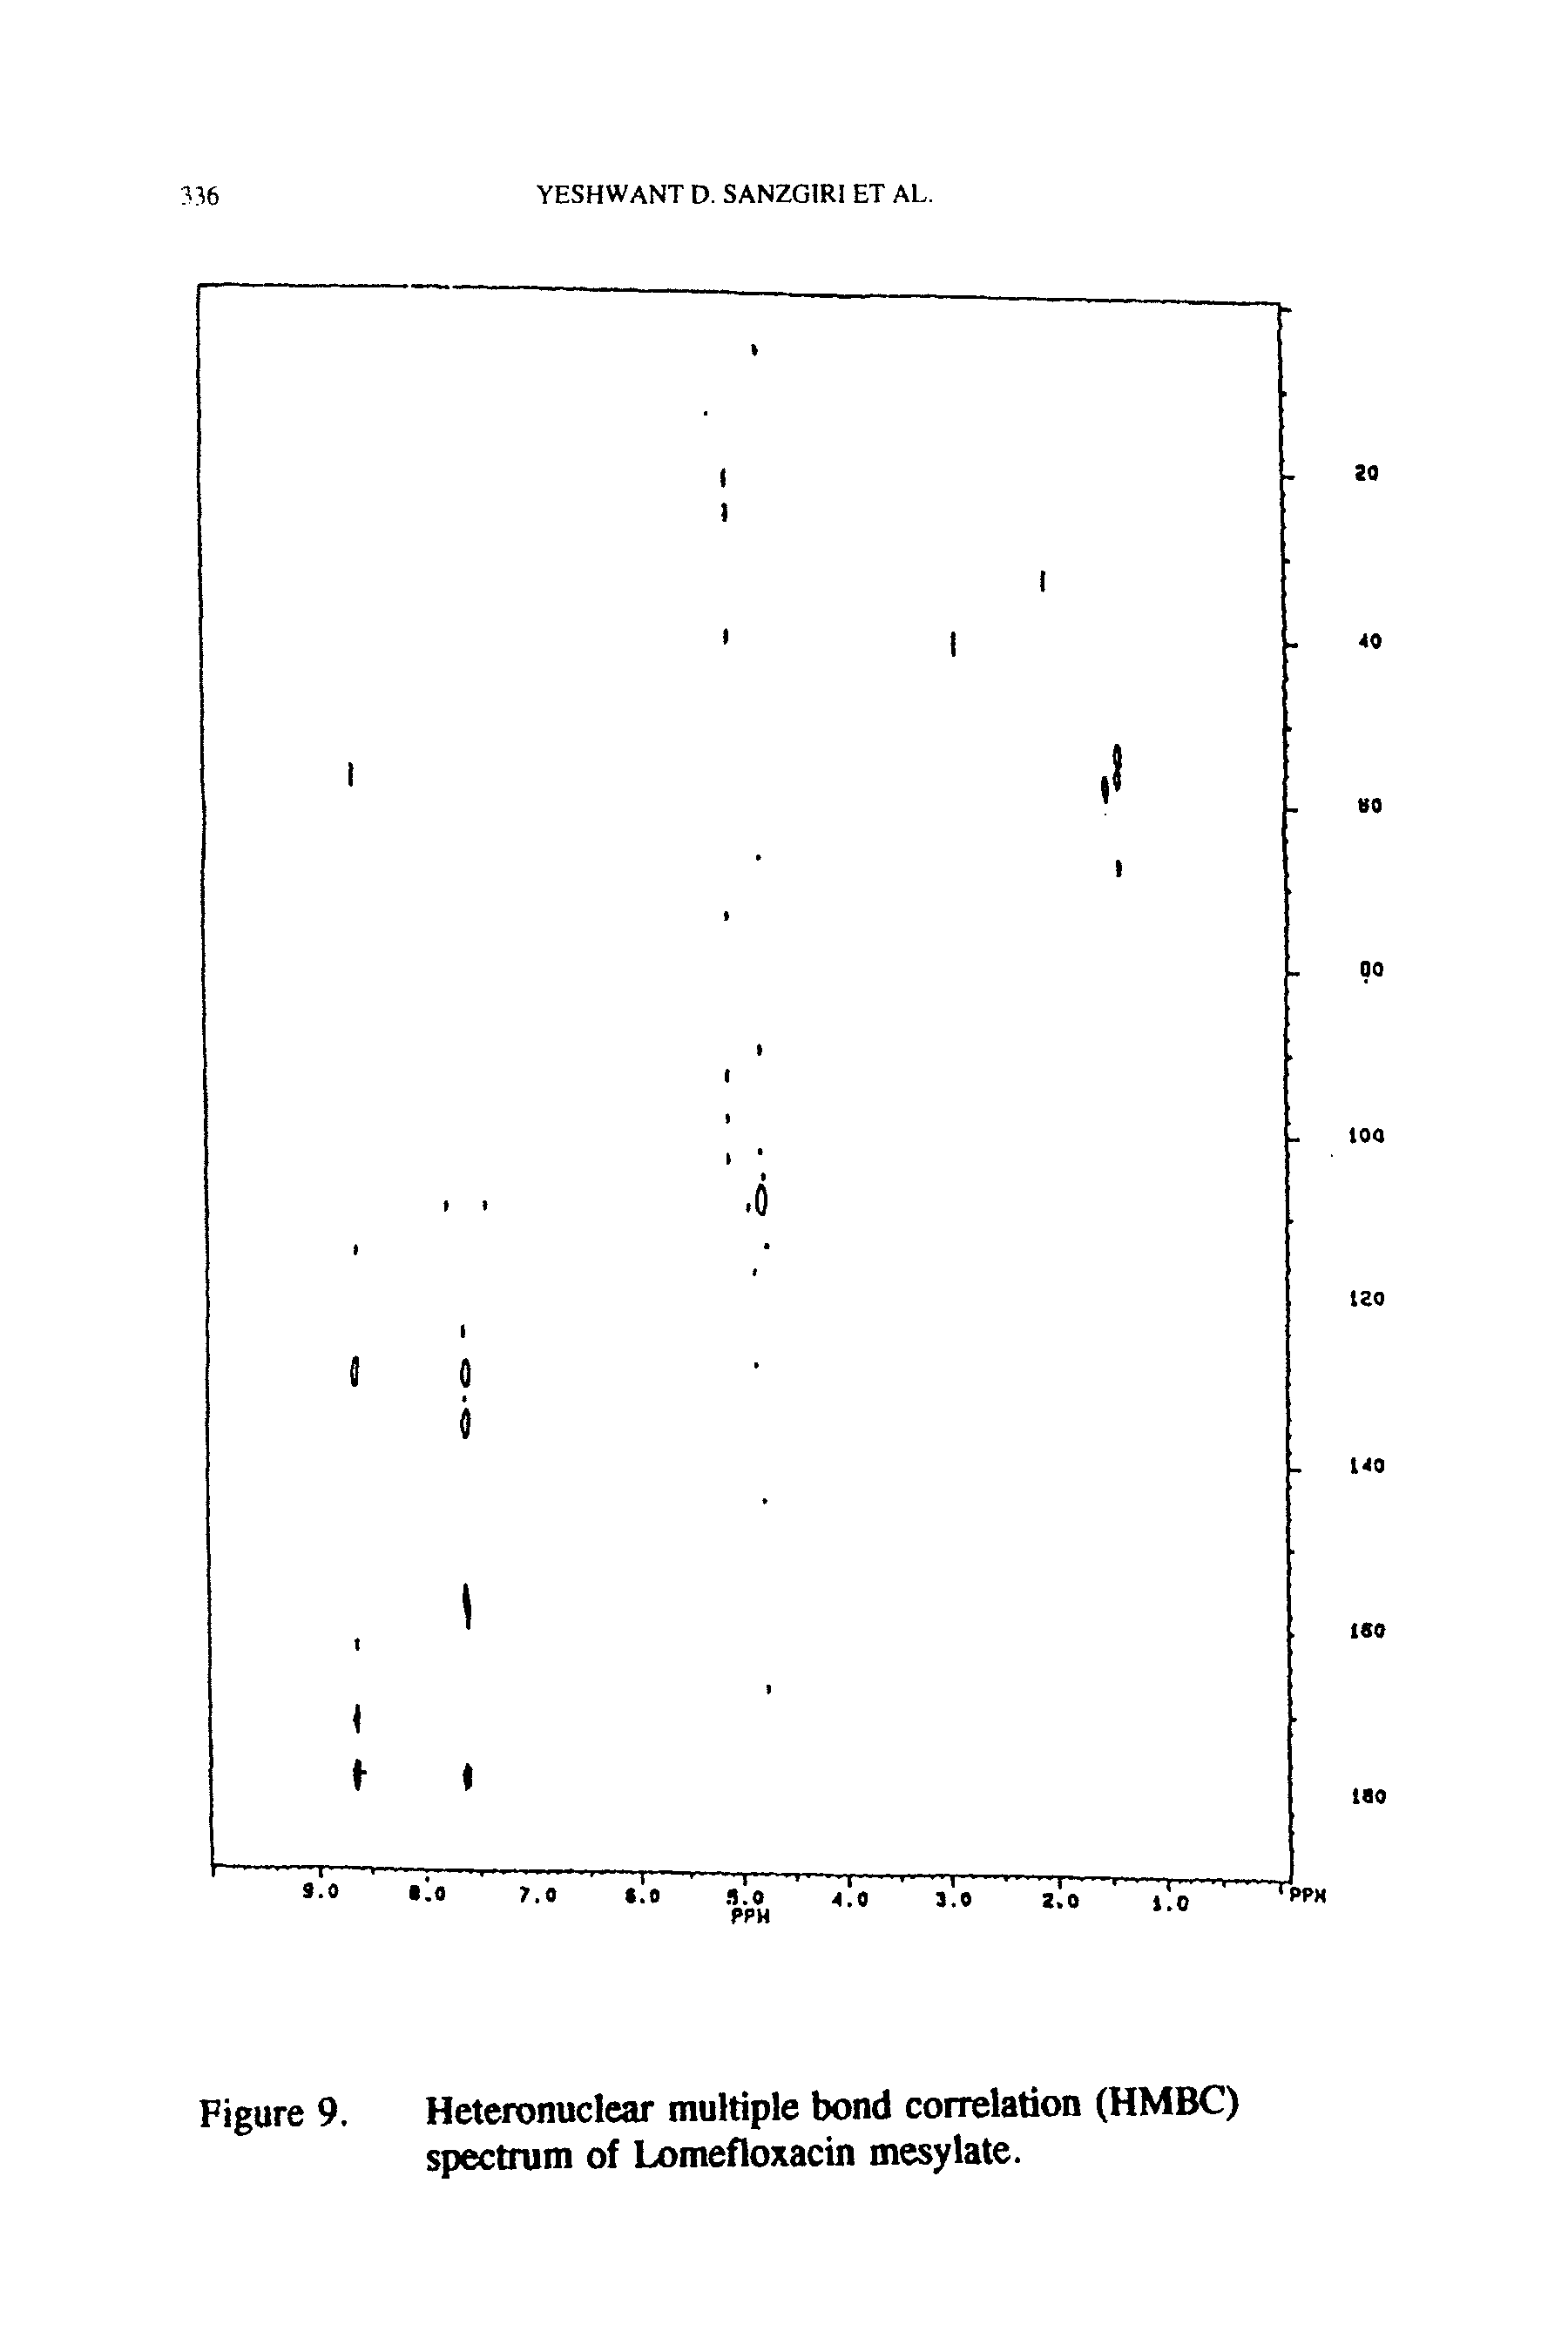 Figure 9. Heteronuclear multiple bond correlation (HMBC) spectrum of Lomefloxacin mesylate.